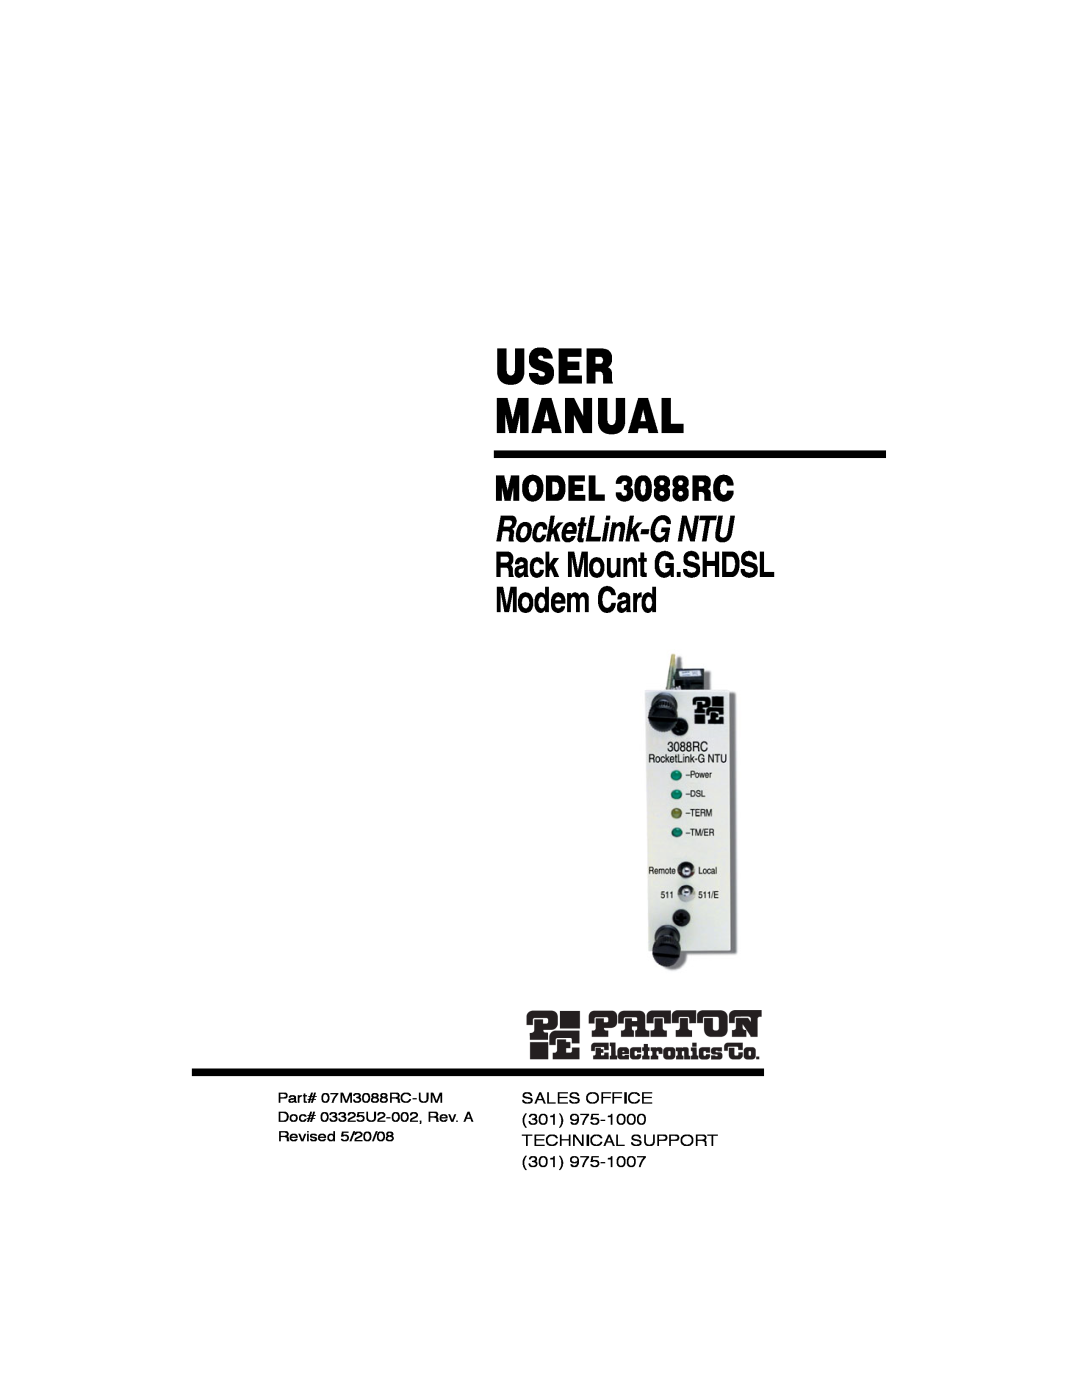 Patton electronic RocketLink-G NTU Rack Mount G.SHDSL Modem Card user manual User Manual, MODEL 3088RC, Part# 07M3088RC-UM 